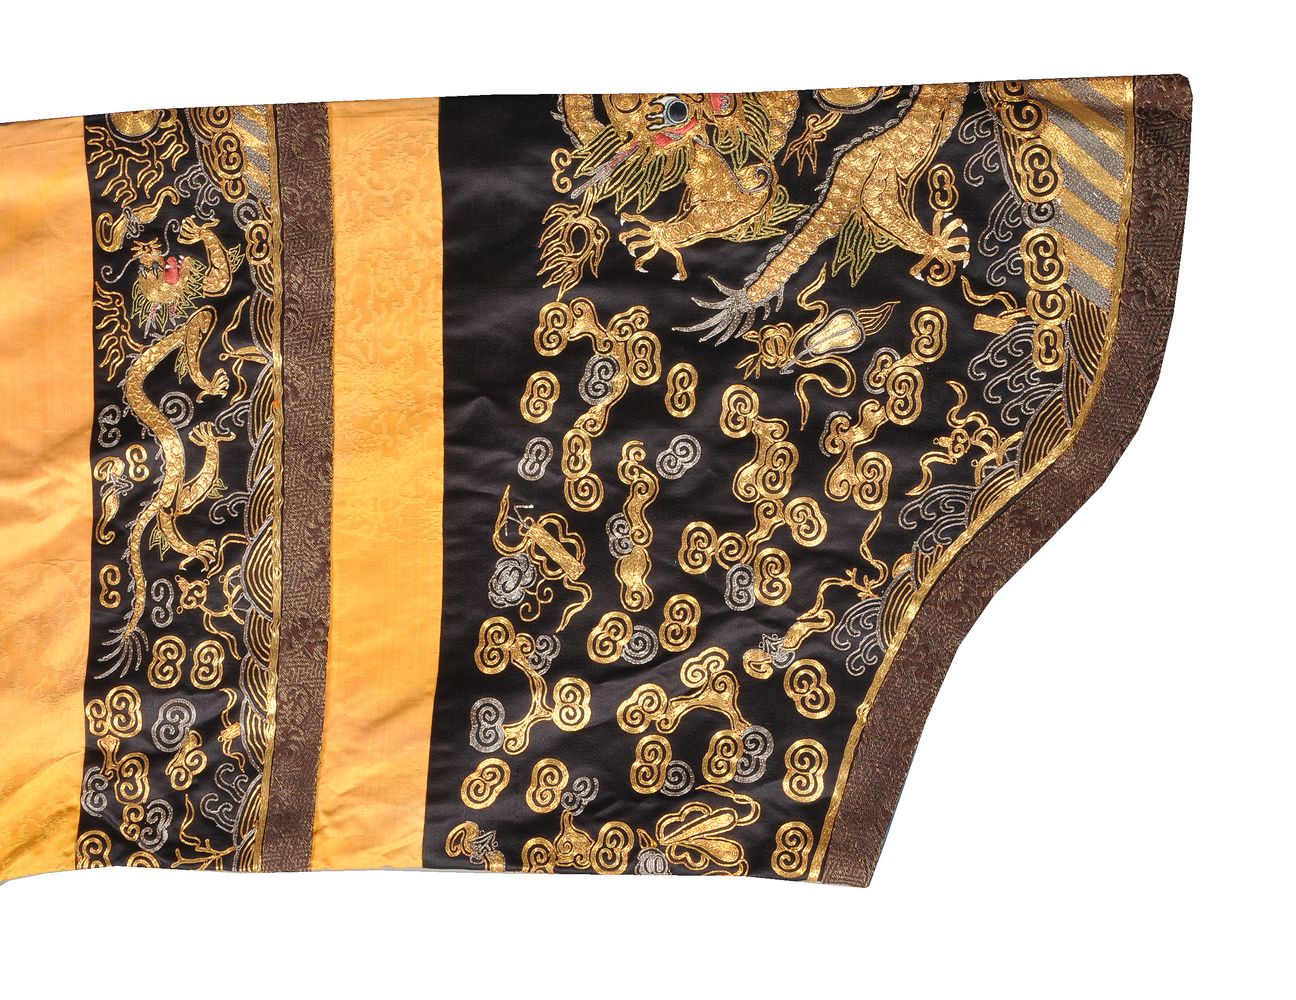 A Chinese golden yellow silk damask informal women's robe - Image 3 of 5